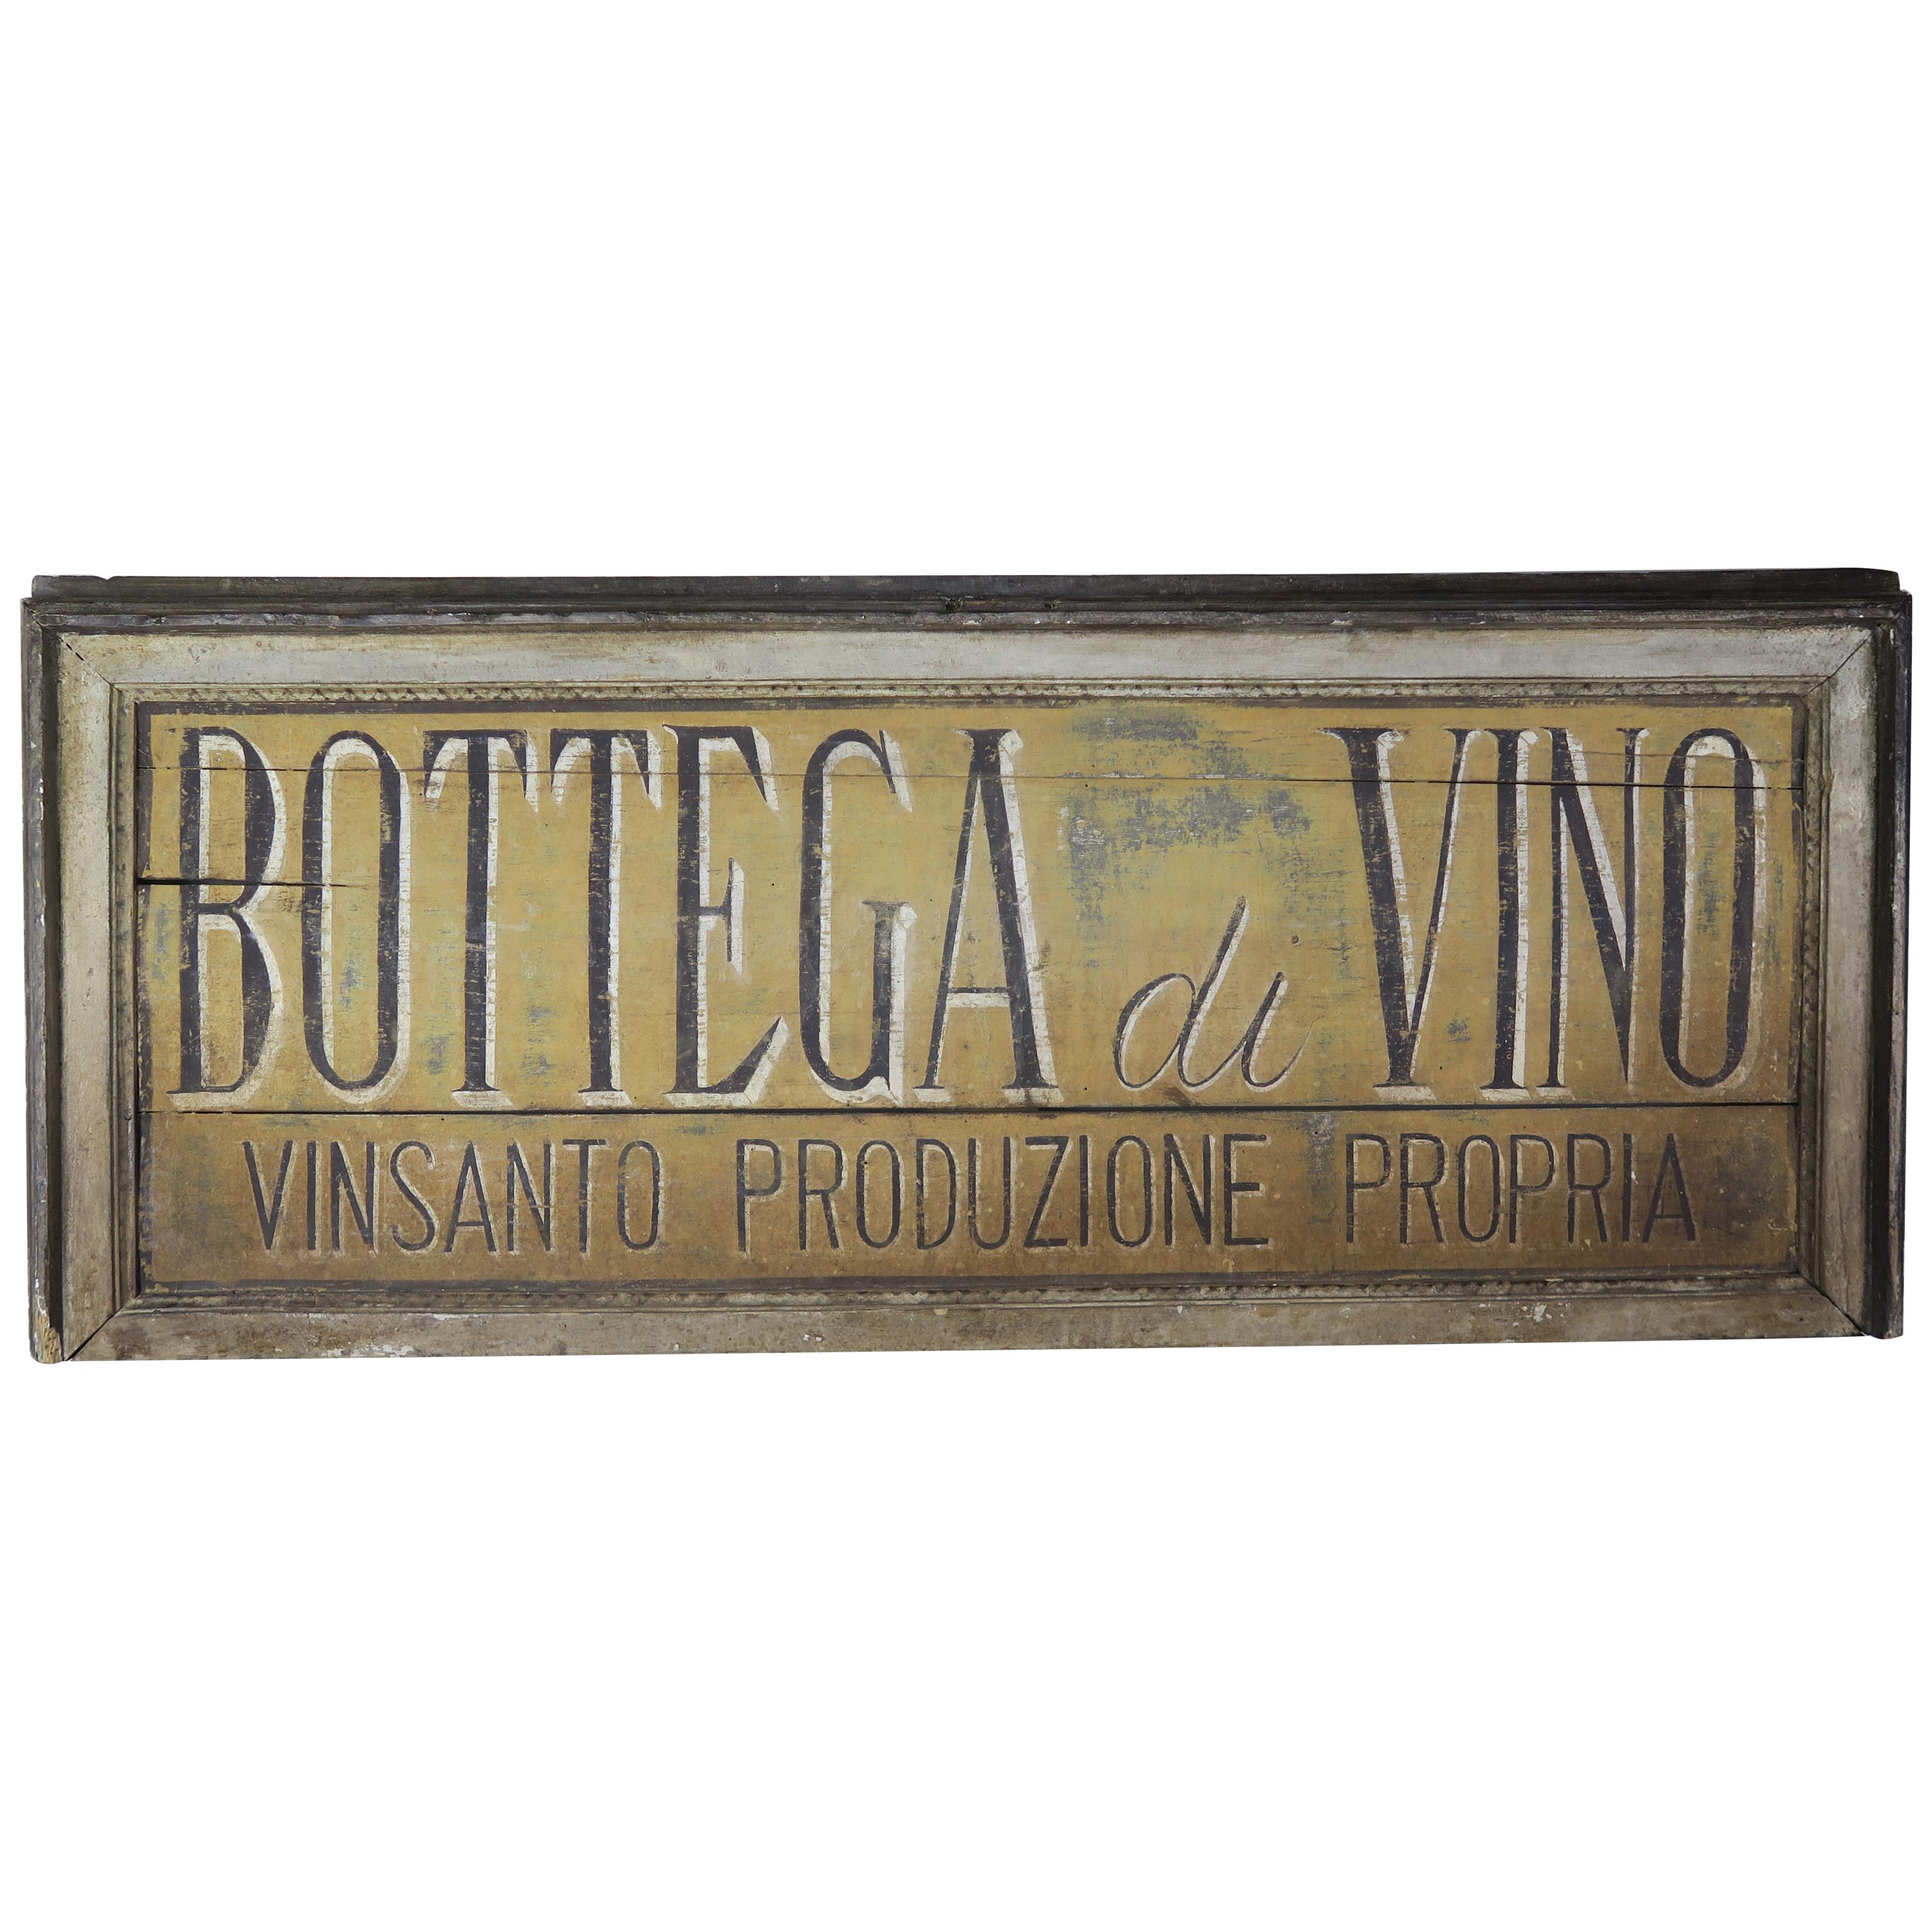 Italian Hand Painted "Bottega di Vino" Sign, circa 1900